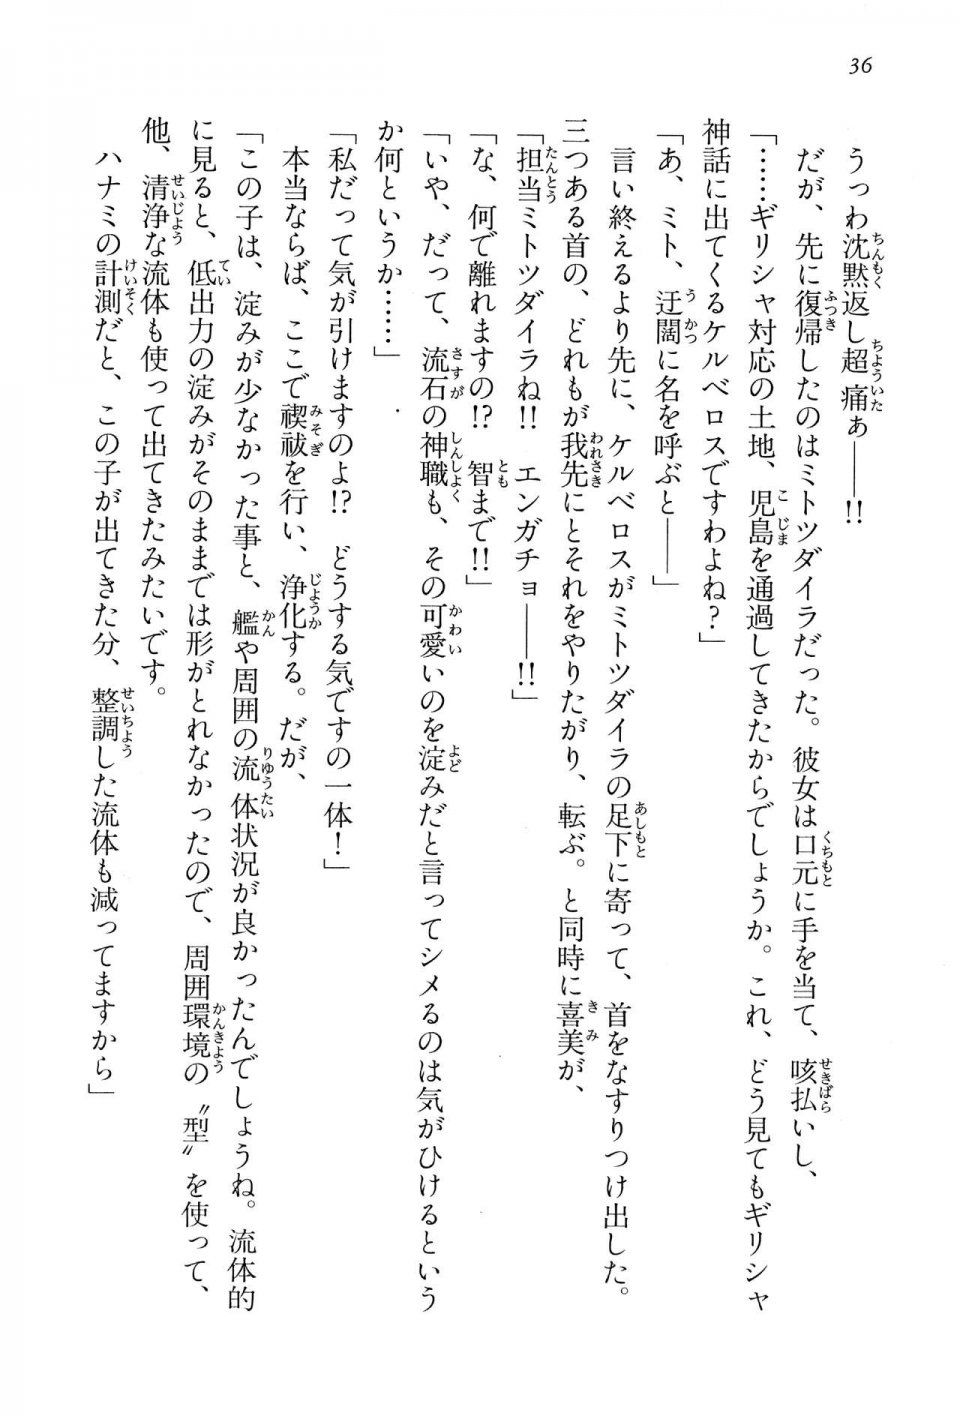 Kyoukai Senjou no Horizon BD Special Mininovel Vol 1(1A) - Photo #40